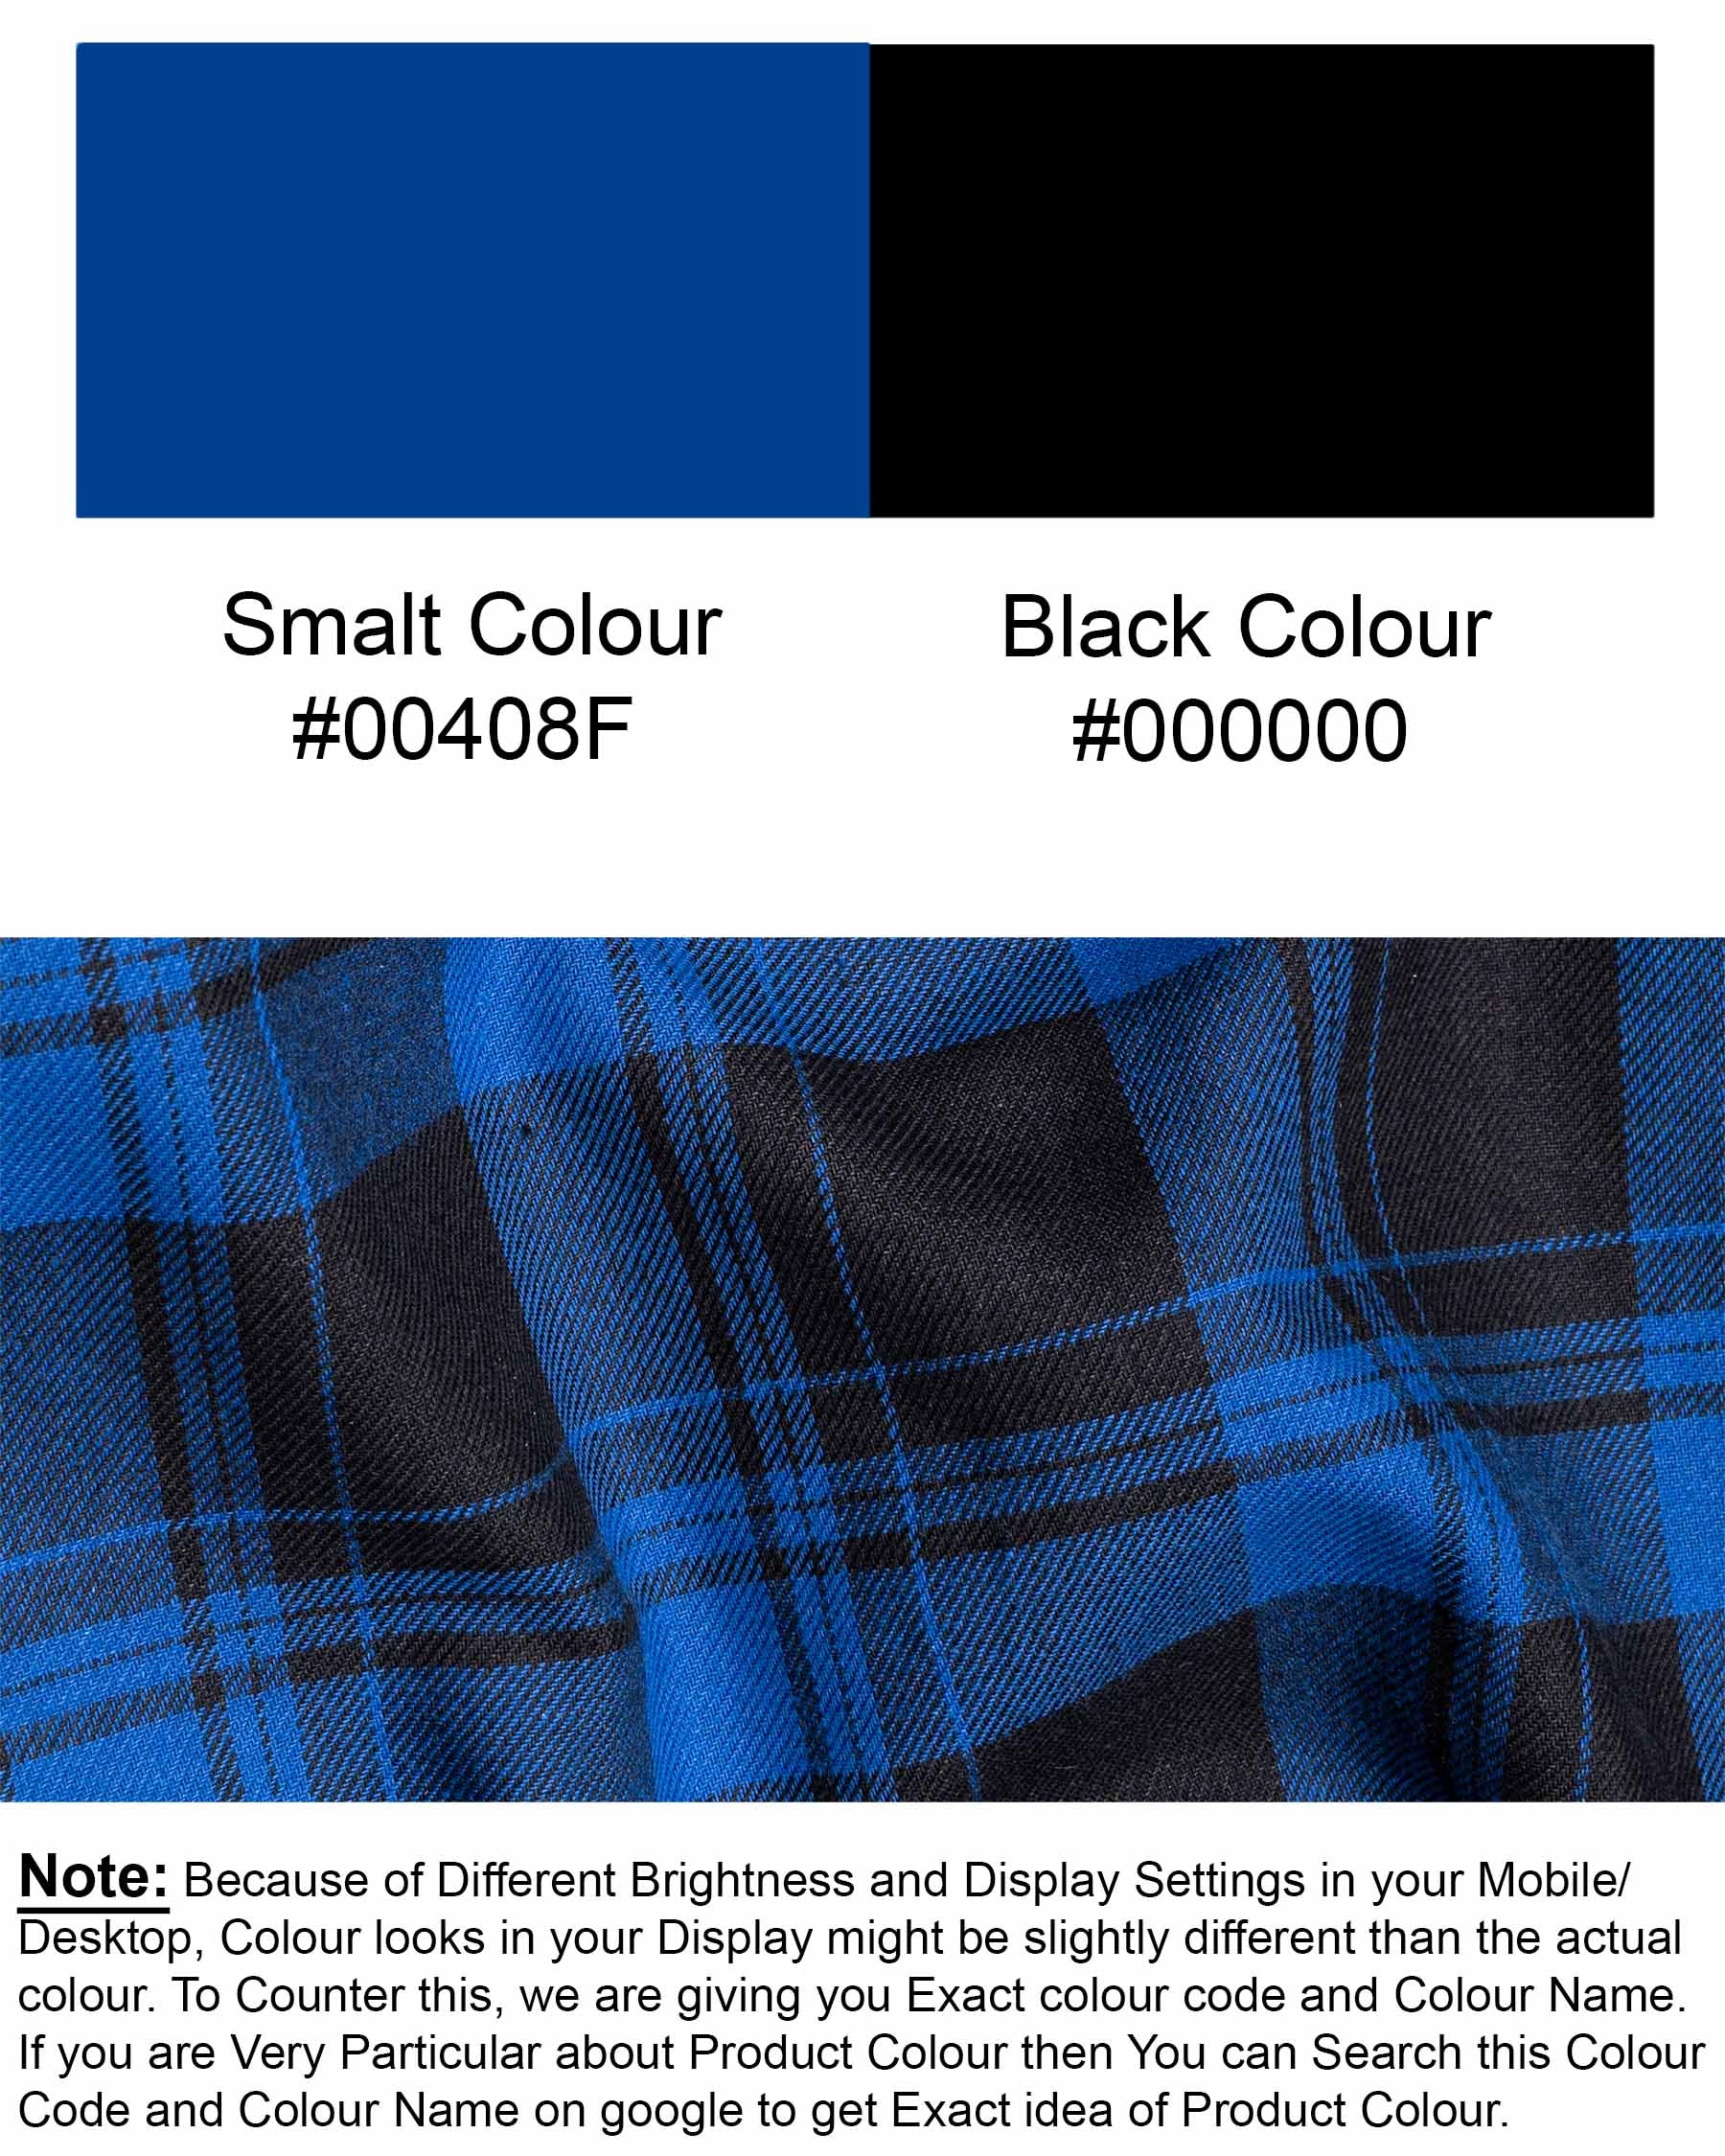 Smalt Blue and Black Plaid Twill Premium Cotton Kurta Shirt 6890-KS-38,6890-KS-38,6890-KS-39,6890-KS-39,6890-KS-40,6890-KS-40,6890-KS-42,6890-KS-42,6890-KS-44,6890-KS-44,6890-KS-46,6890-KS-46,6890-KS-48,6890-KS-48,6890-KS-50,6890-KS-50,6890-KS-52,6890-KS-52